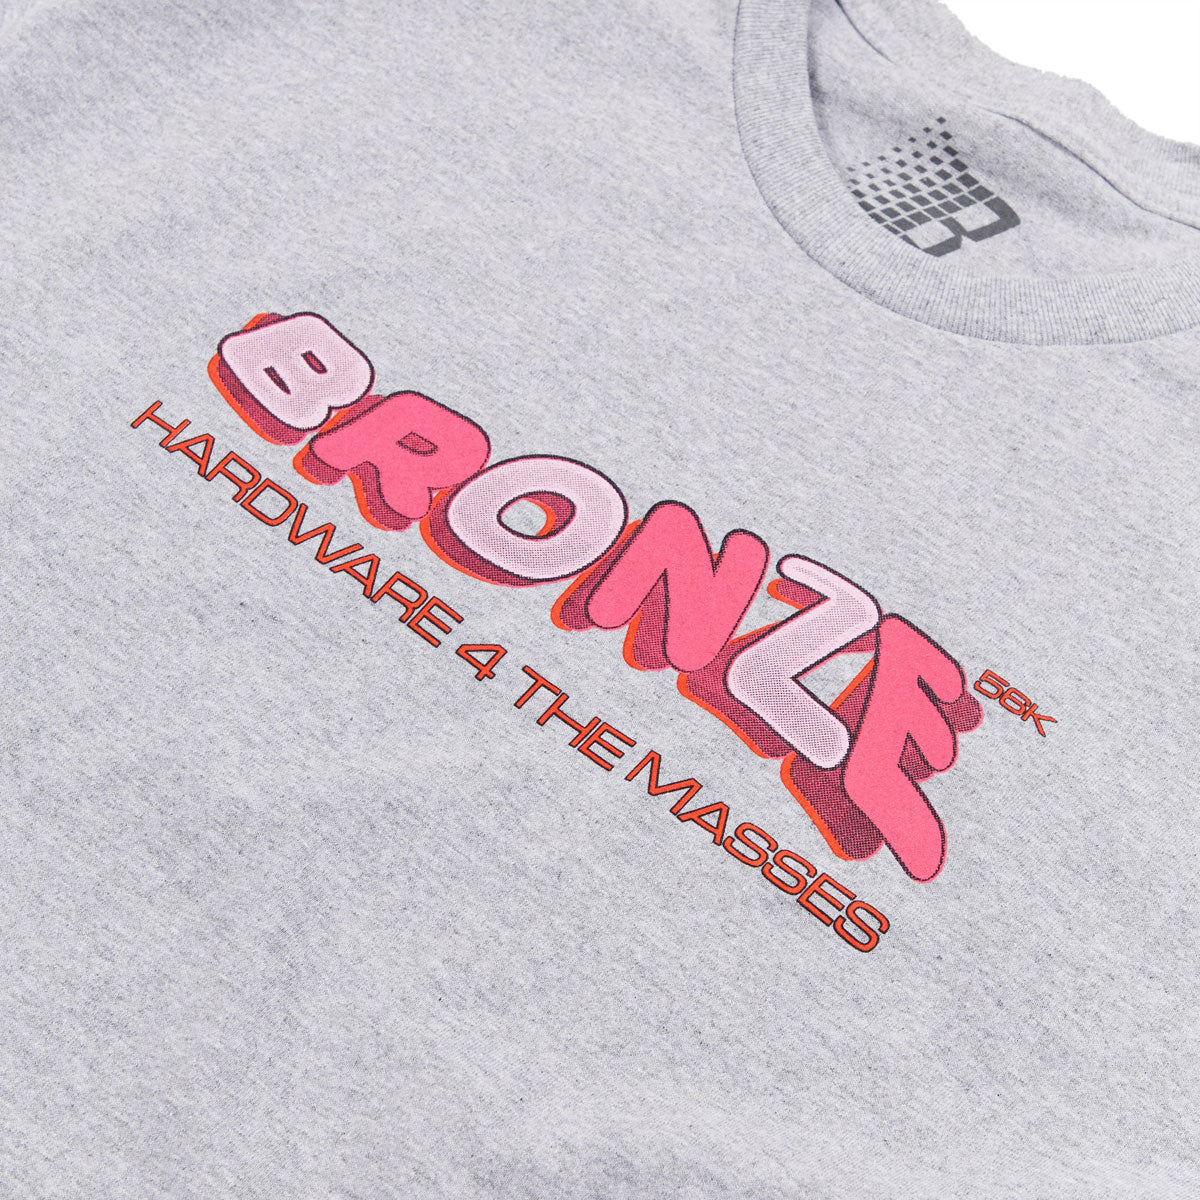 Bronze 56k Blaze T-Shirt - Heather Grey image 2